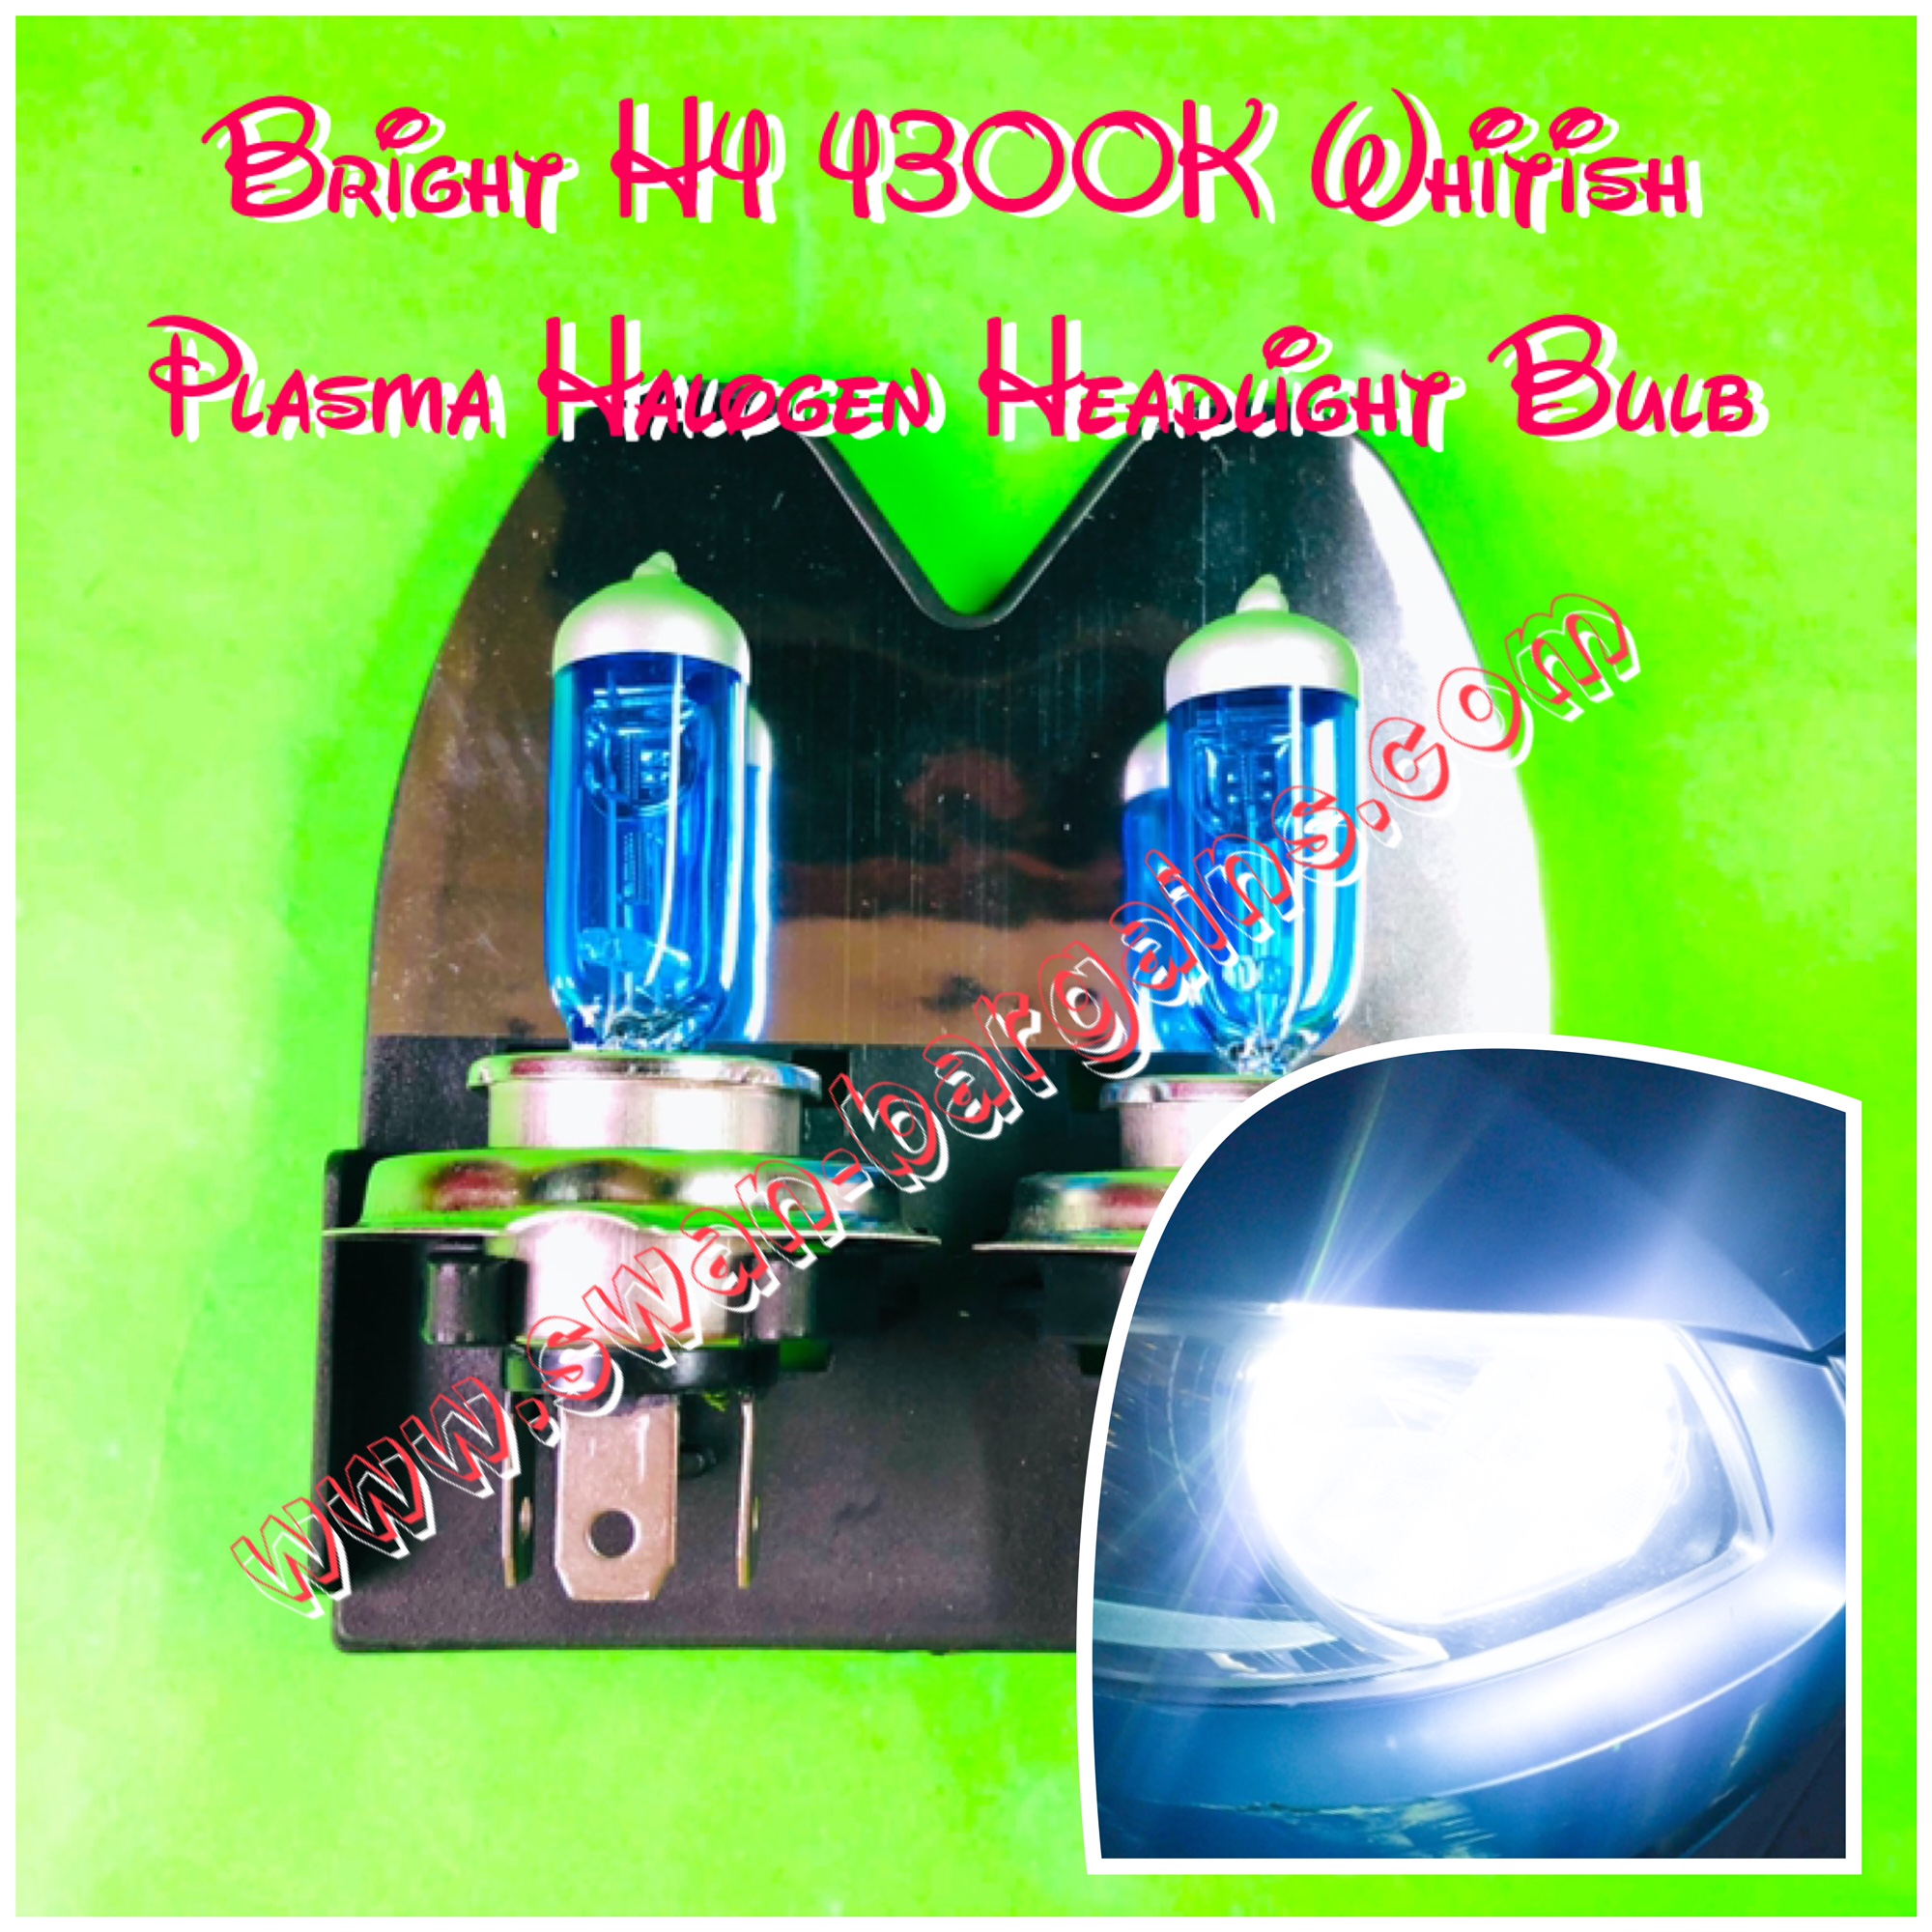 H4 4300K Whitish Halogen Headlight Low High Beam Bulb Singapore